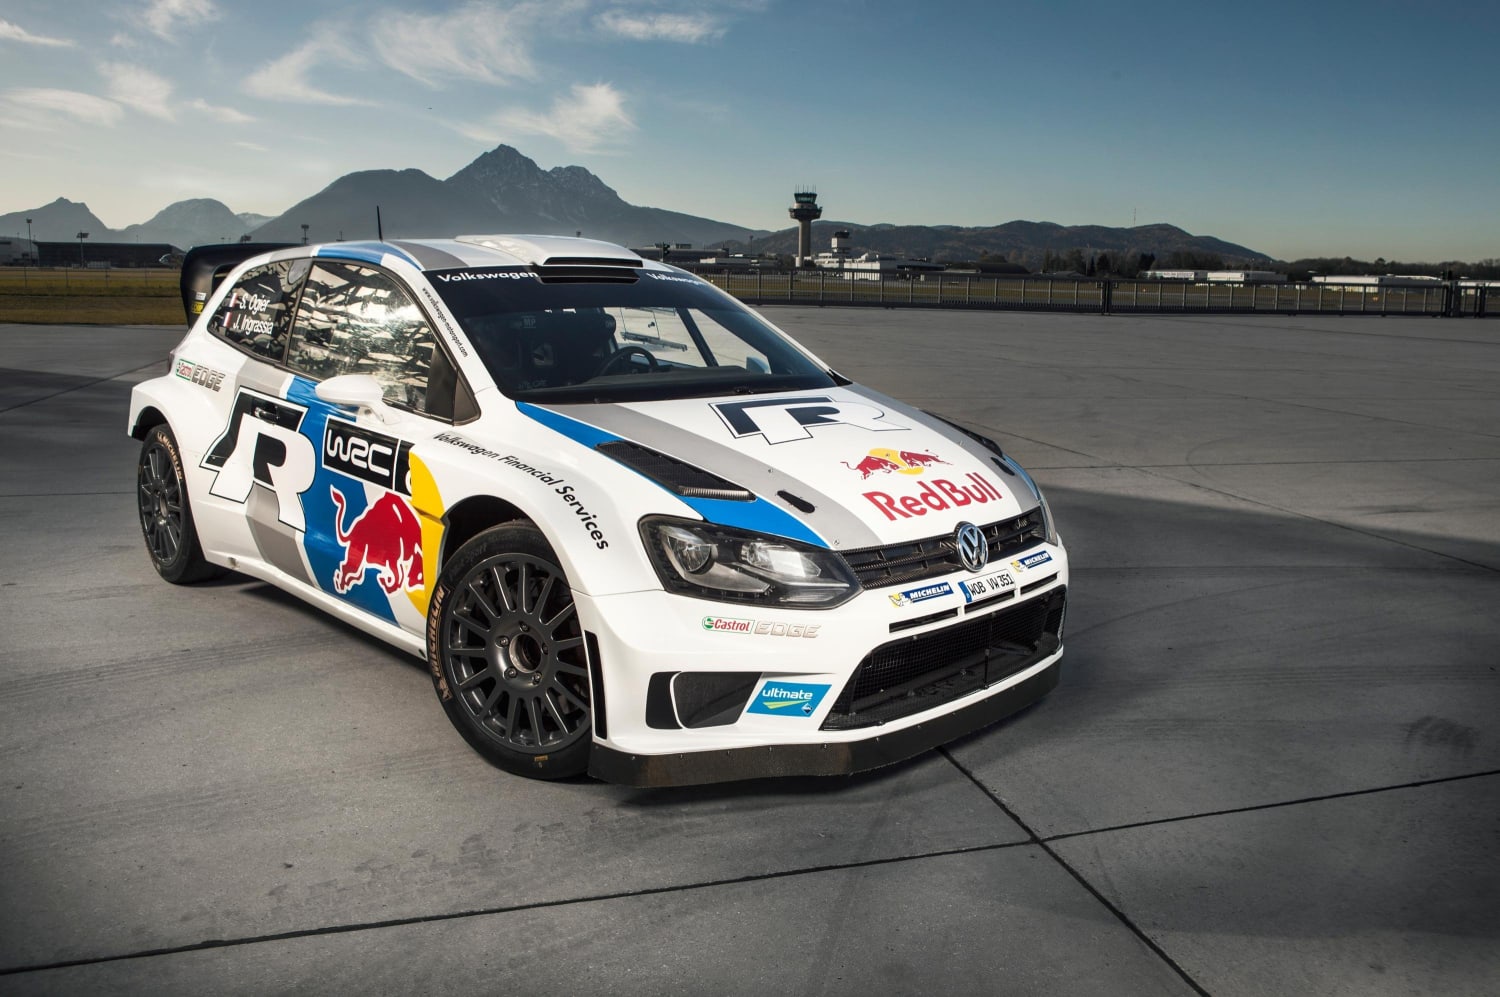 Closer look at VW's Polo R WRC machine